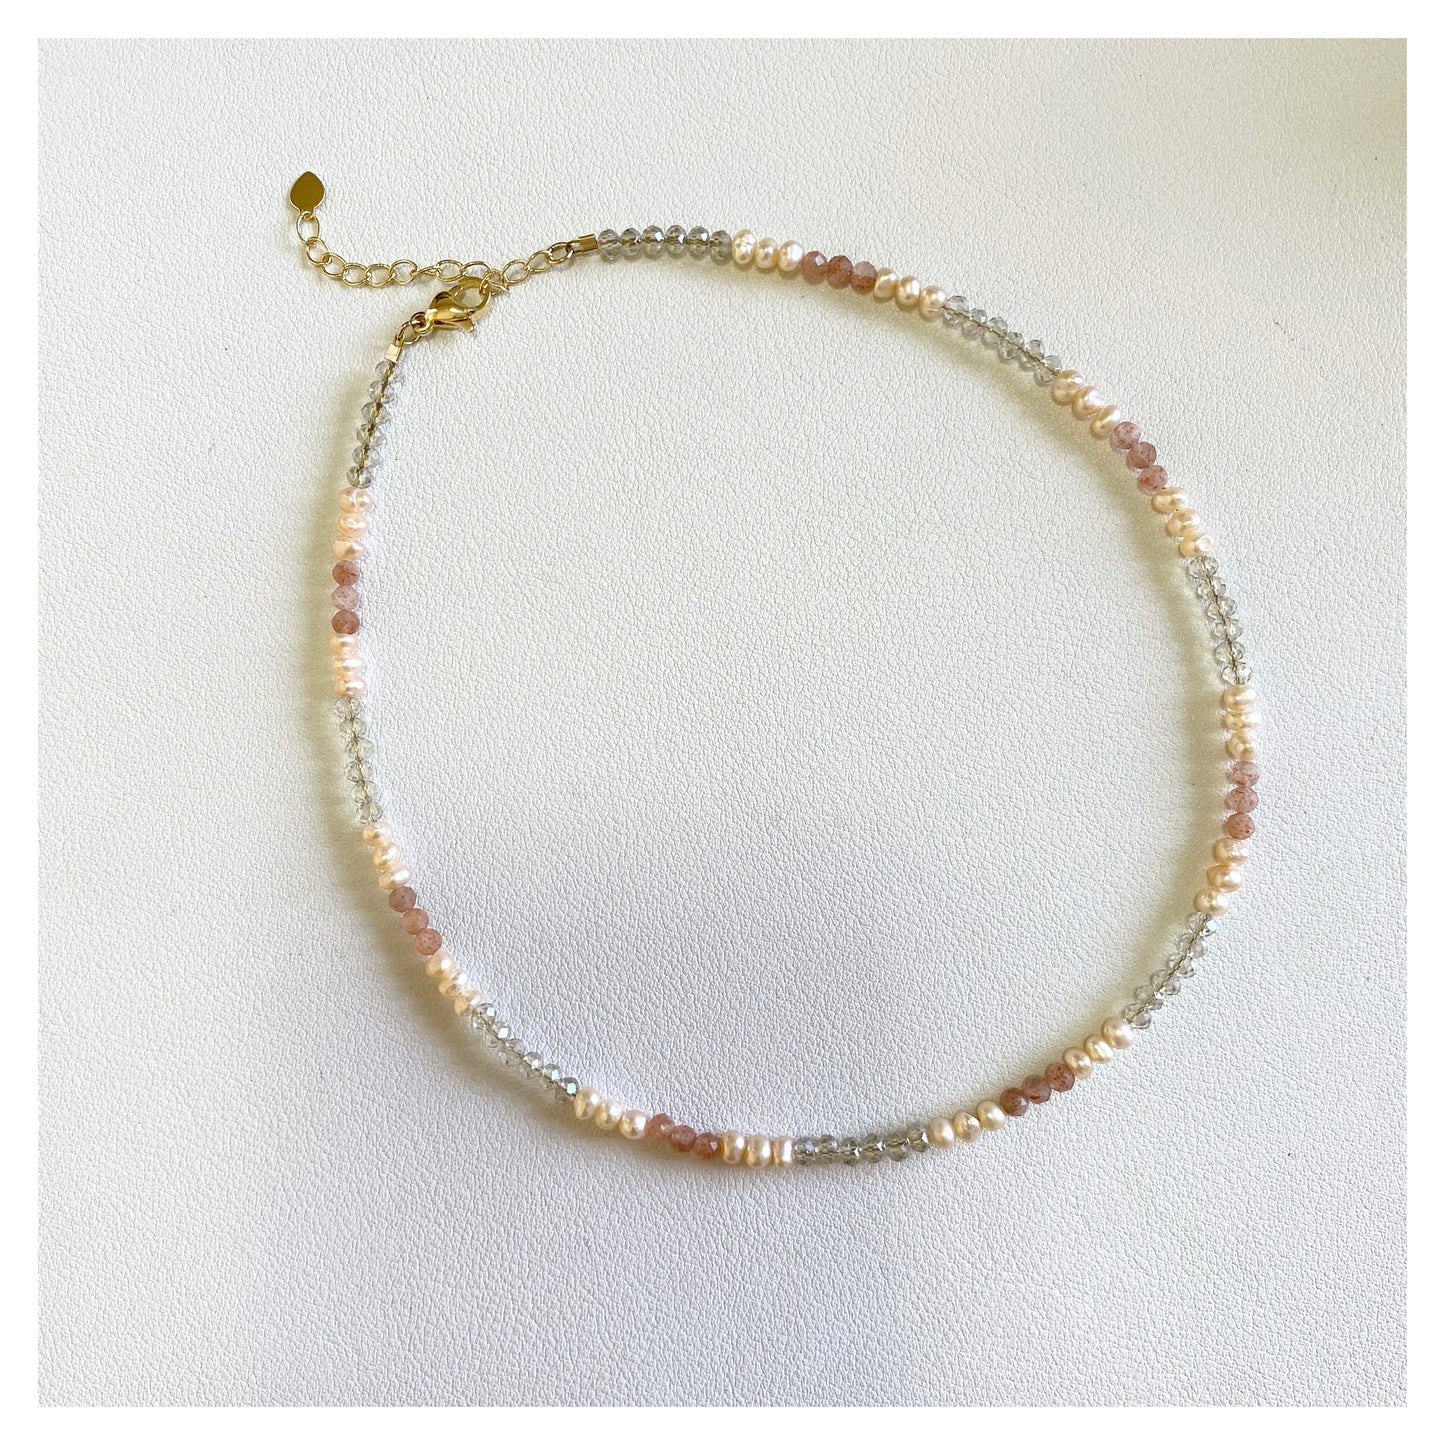 Pearls + Sunstone + Glass Beads Choker Necklace